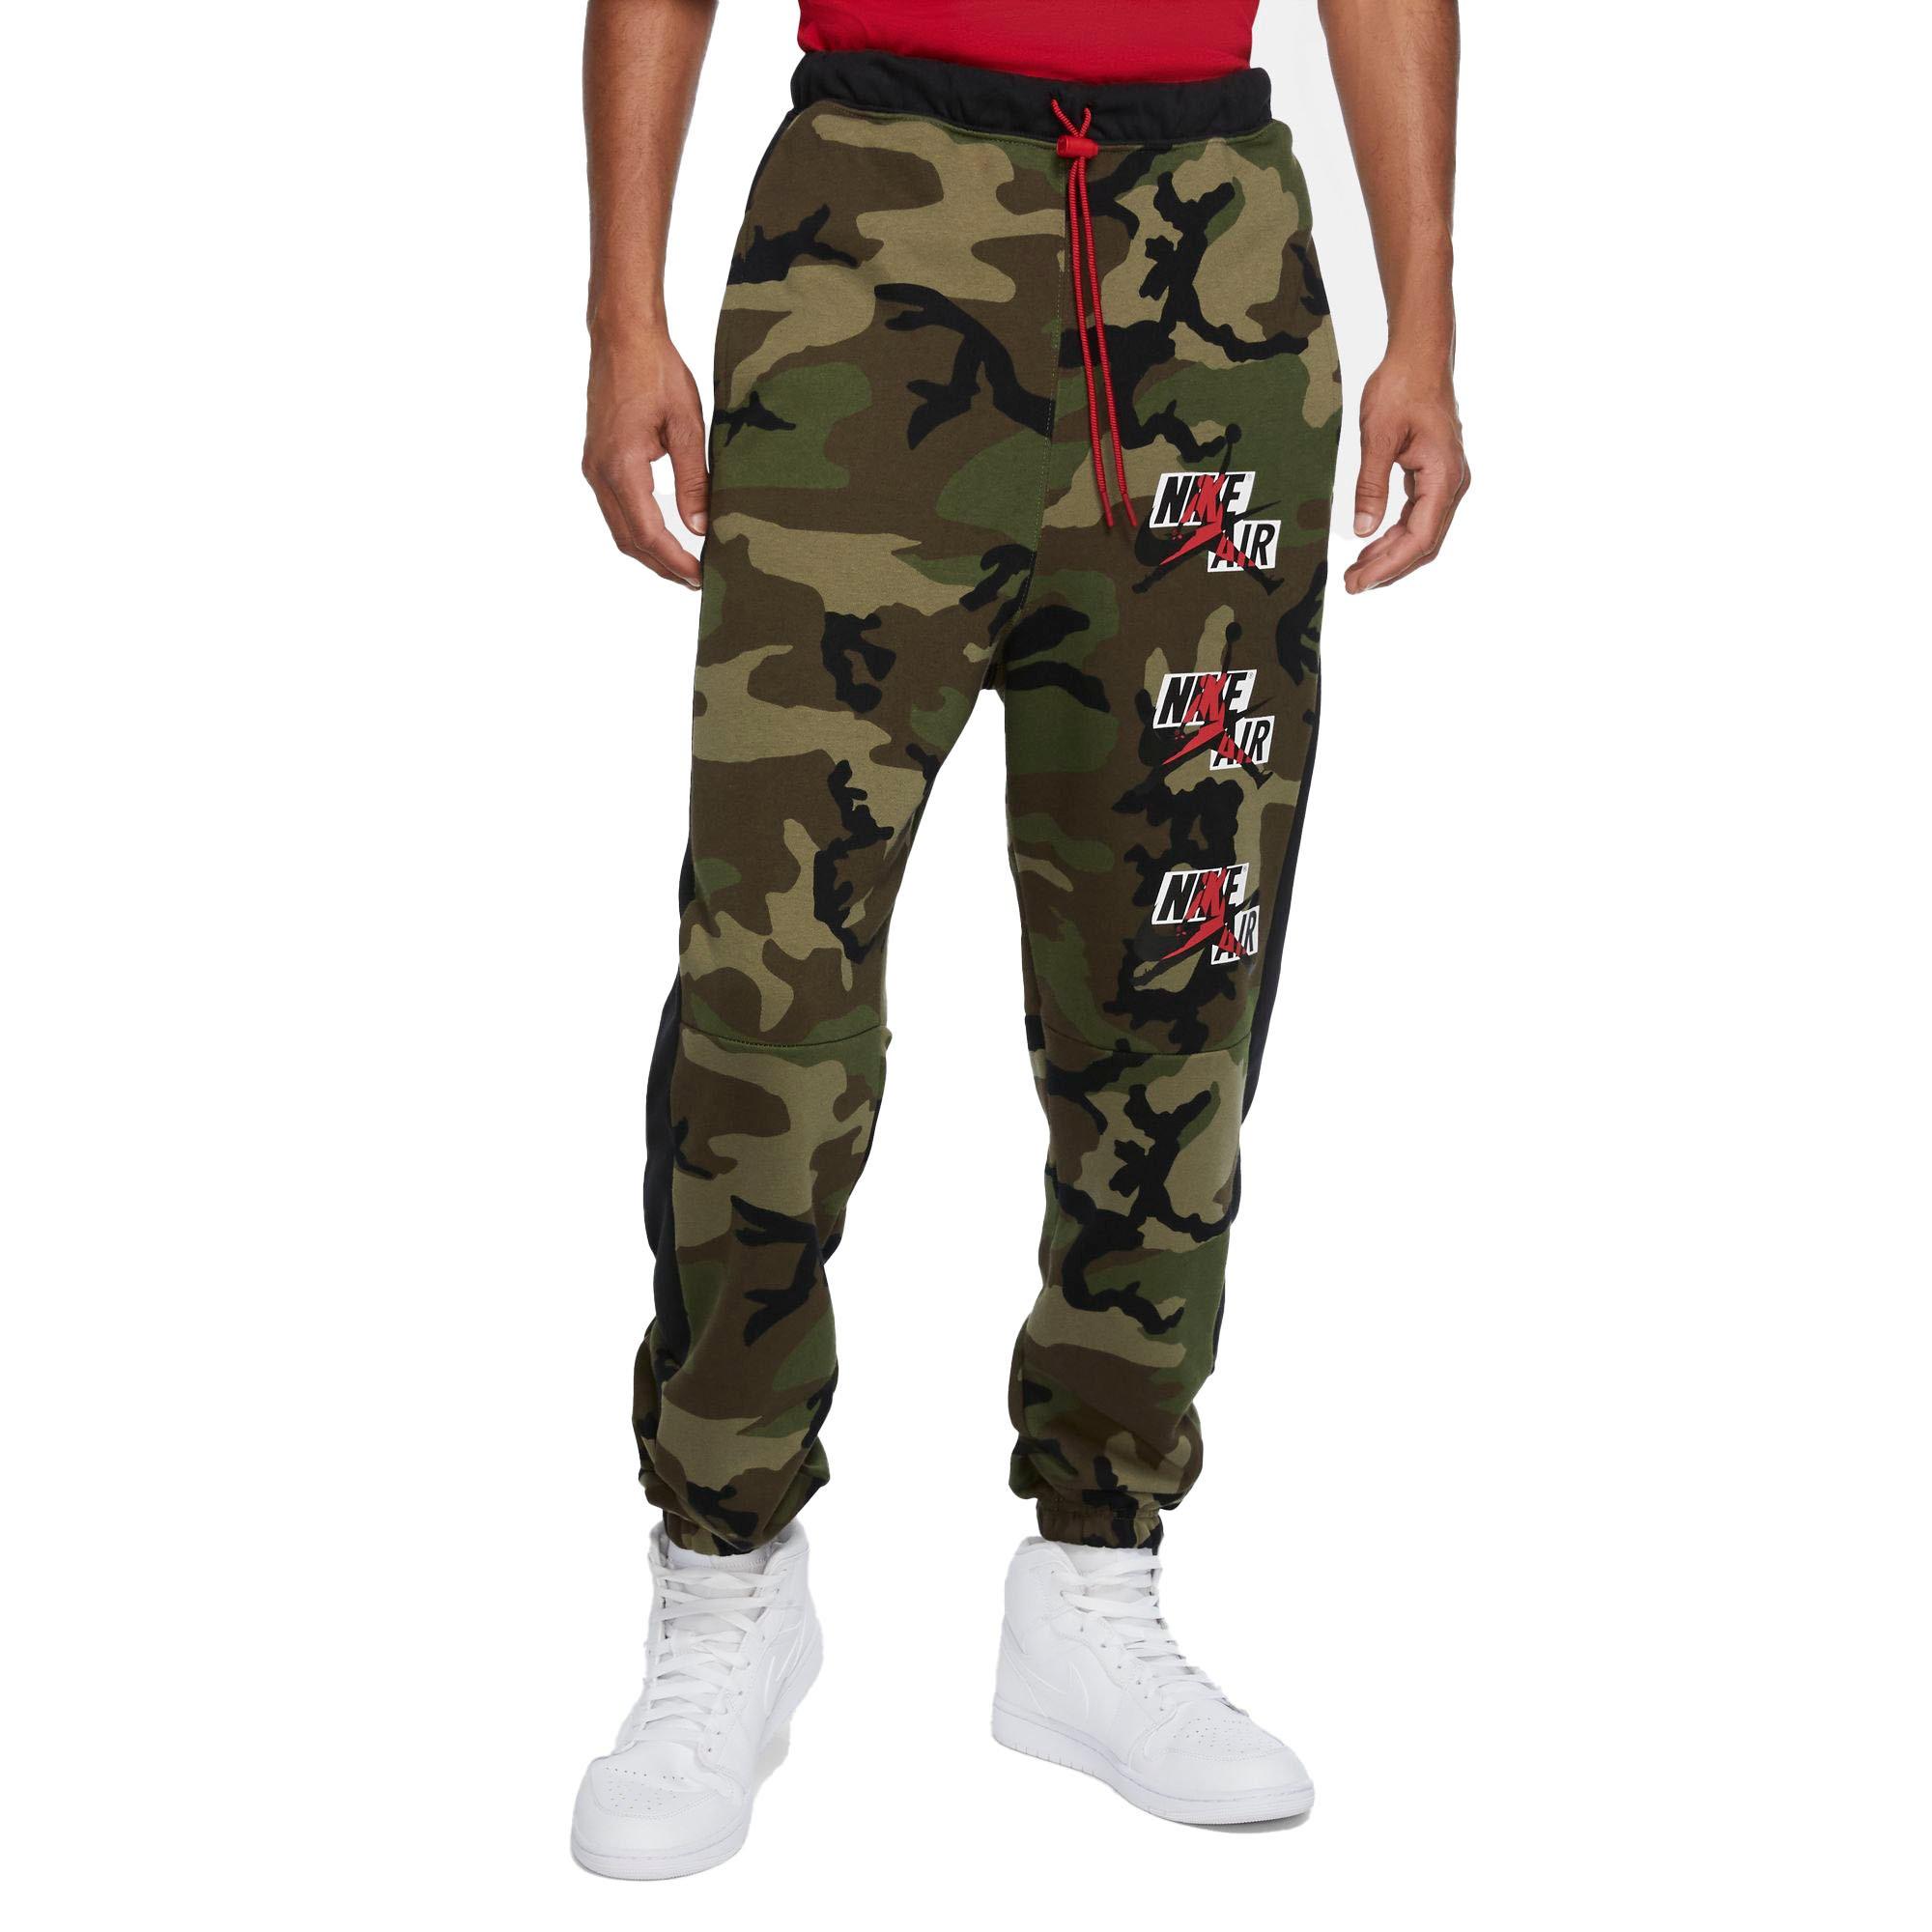 army fatigue pants and jordans